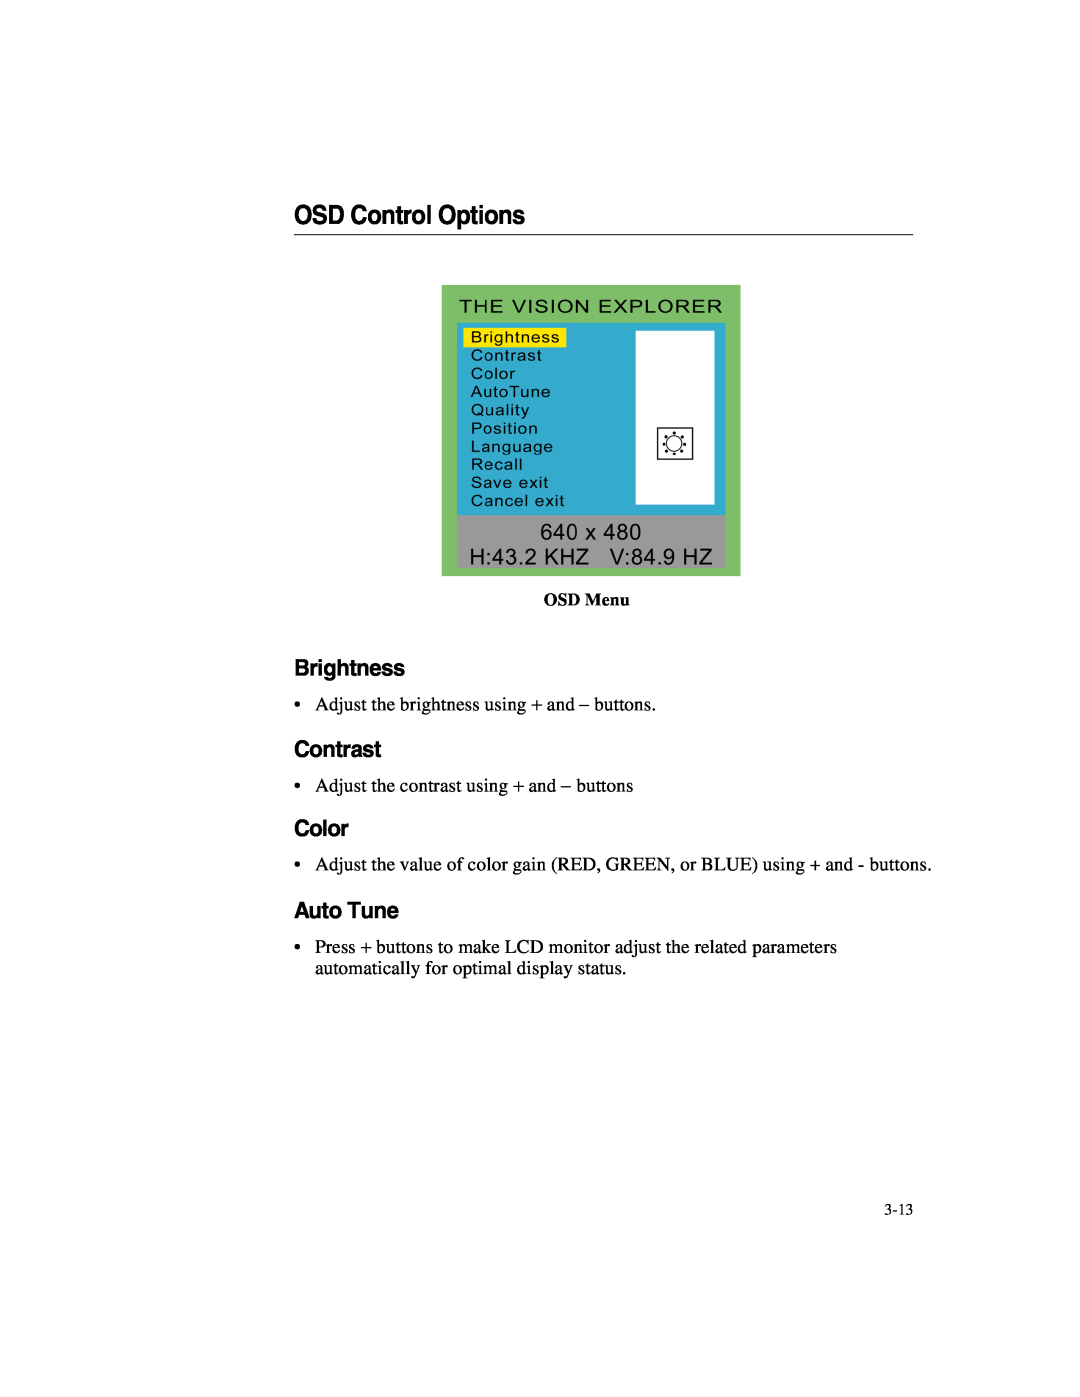 Elo TouchSystems 1247L manual OSD Control Options, Brightness, Contrast, Color, Auto Tune, OSD Menu 